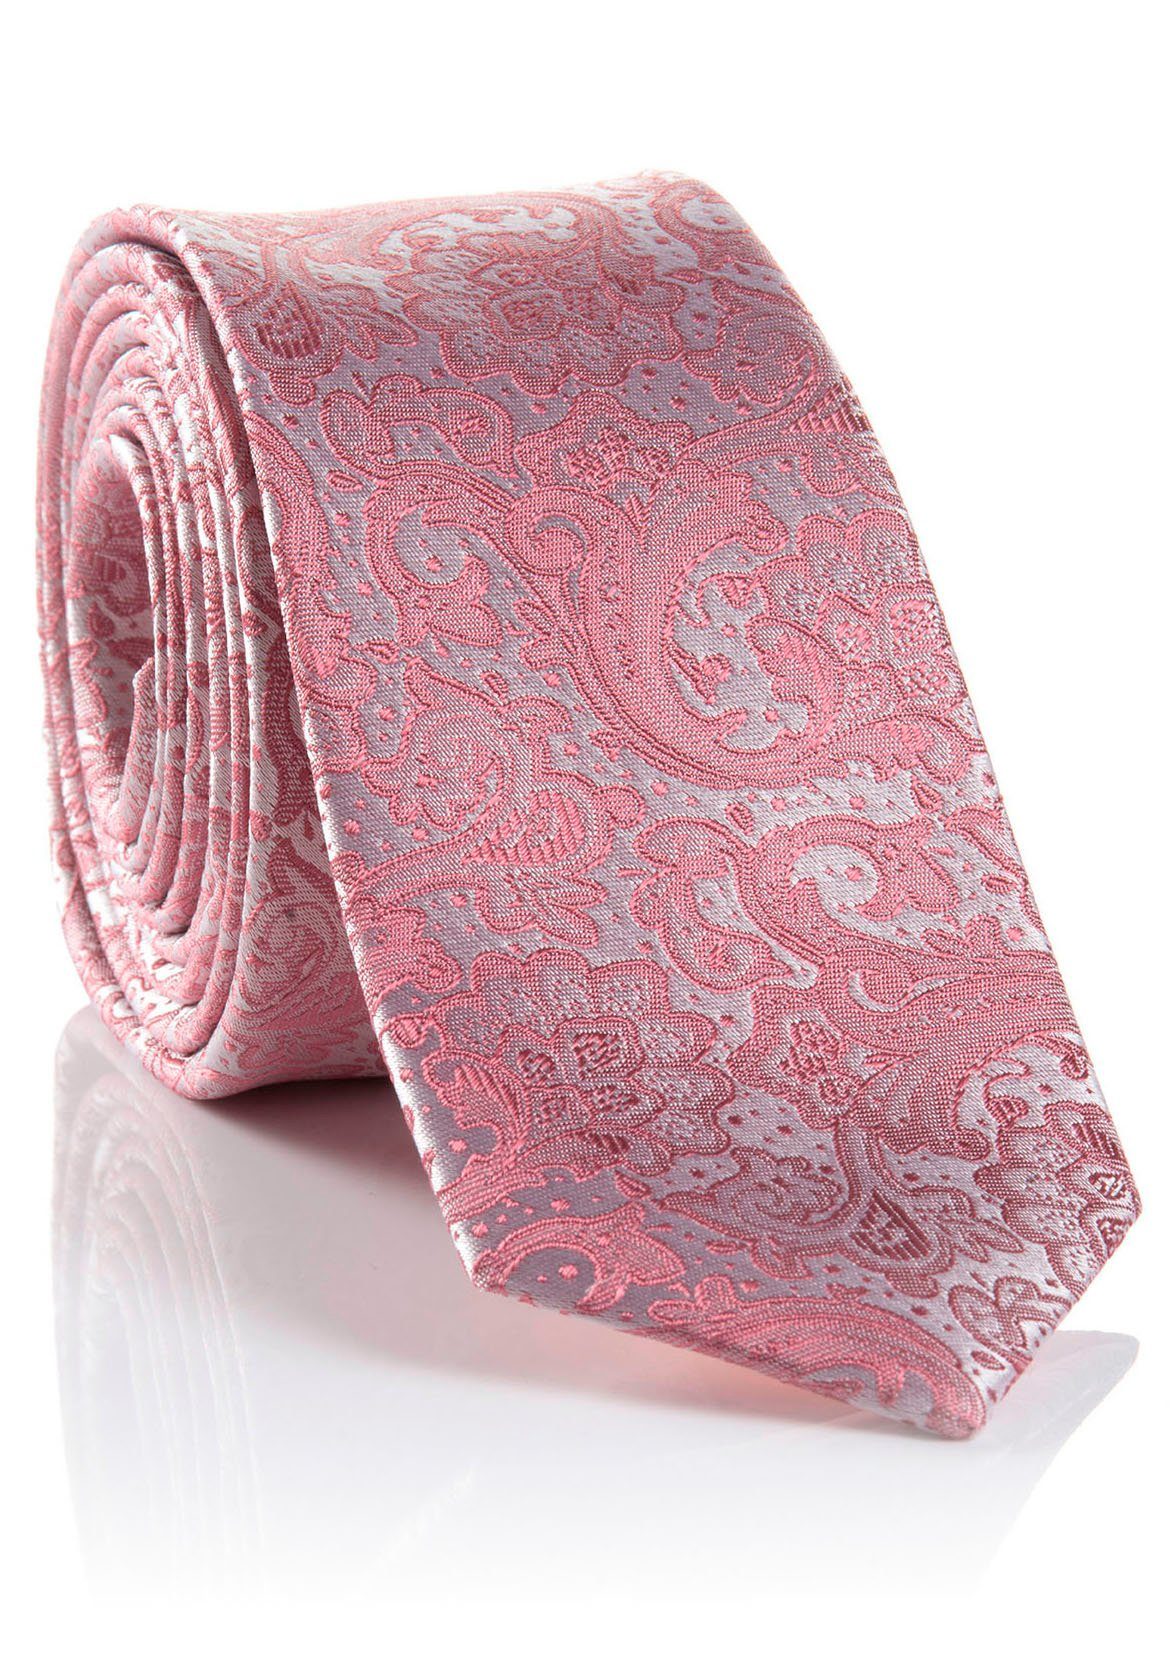 aus bright MONTI red Krawatte Seide, Krawatte LELIO Paisley-Muster reiner